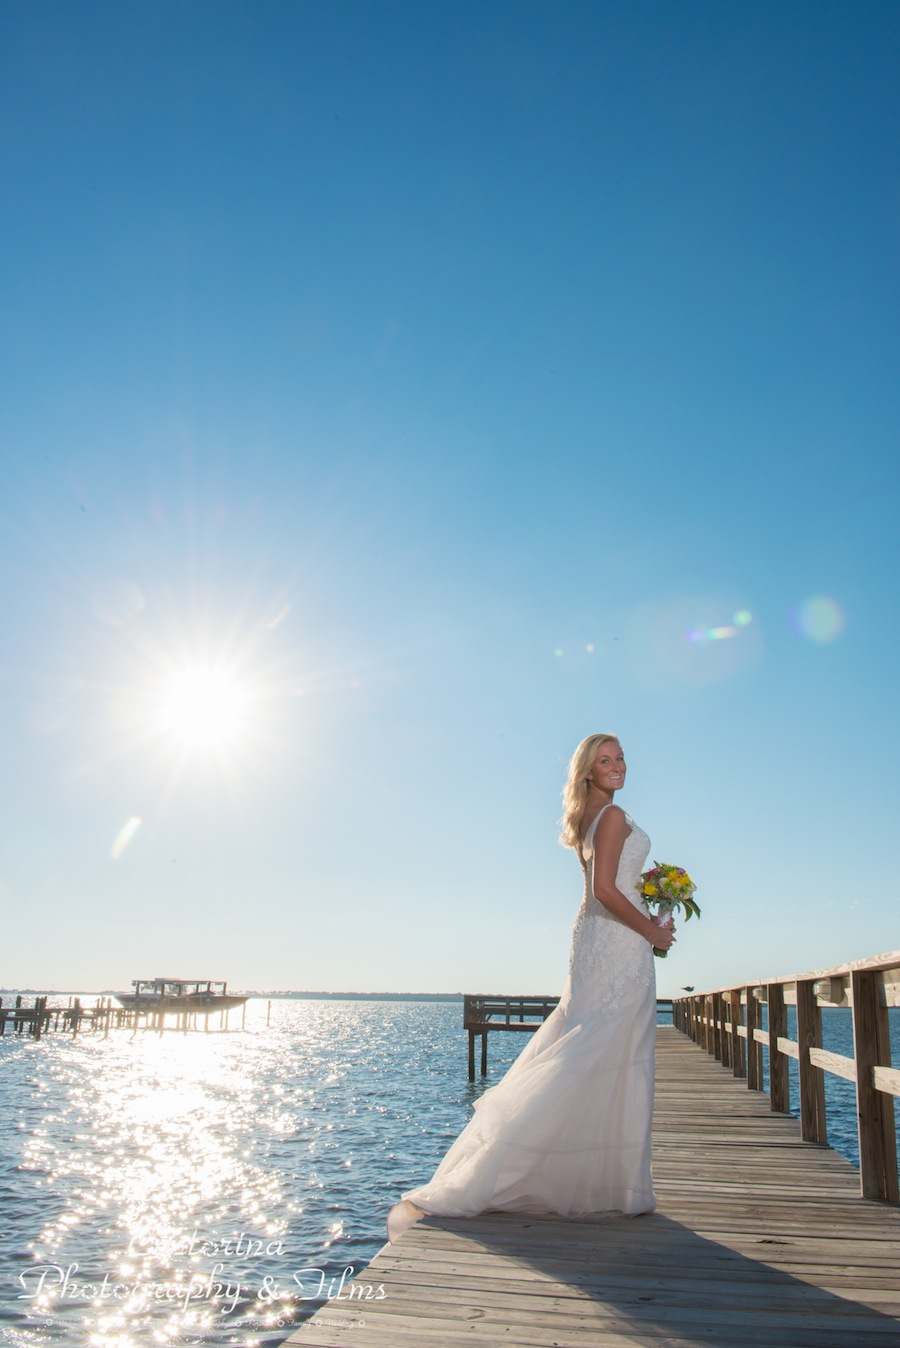 Waterfront Wedding Venue Beso del Sol | Dunedin, Fl - Tampa Bay (4)